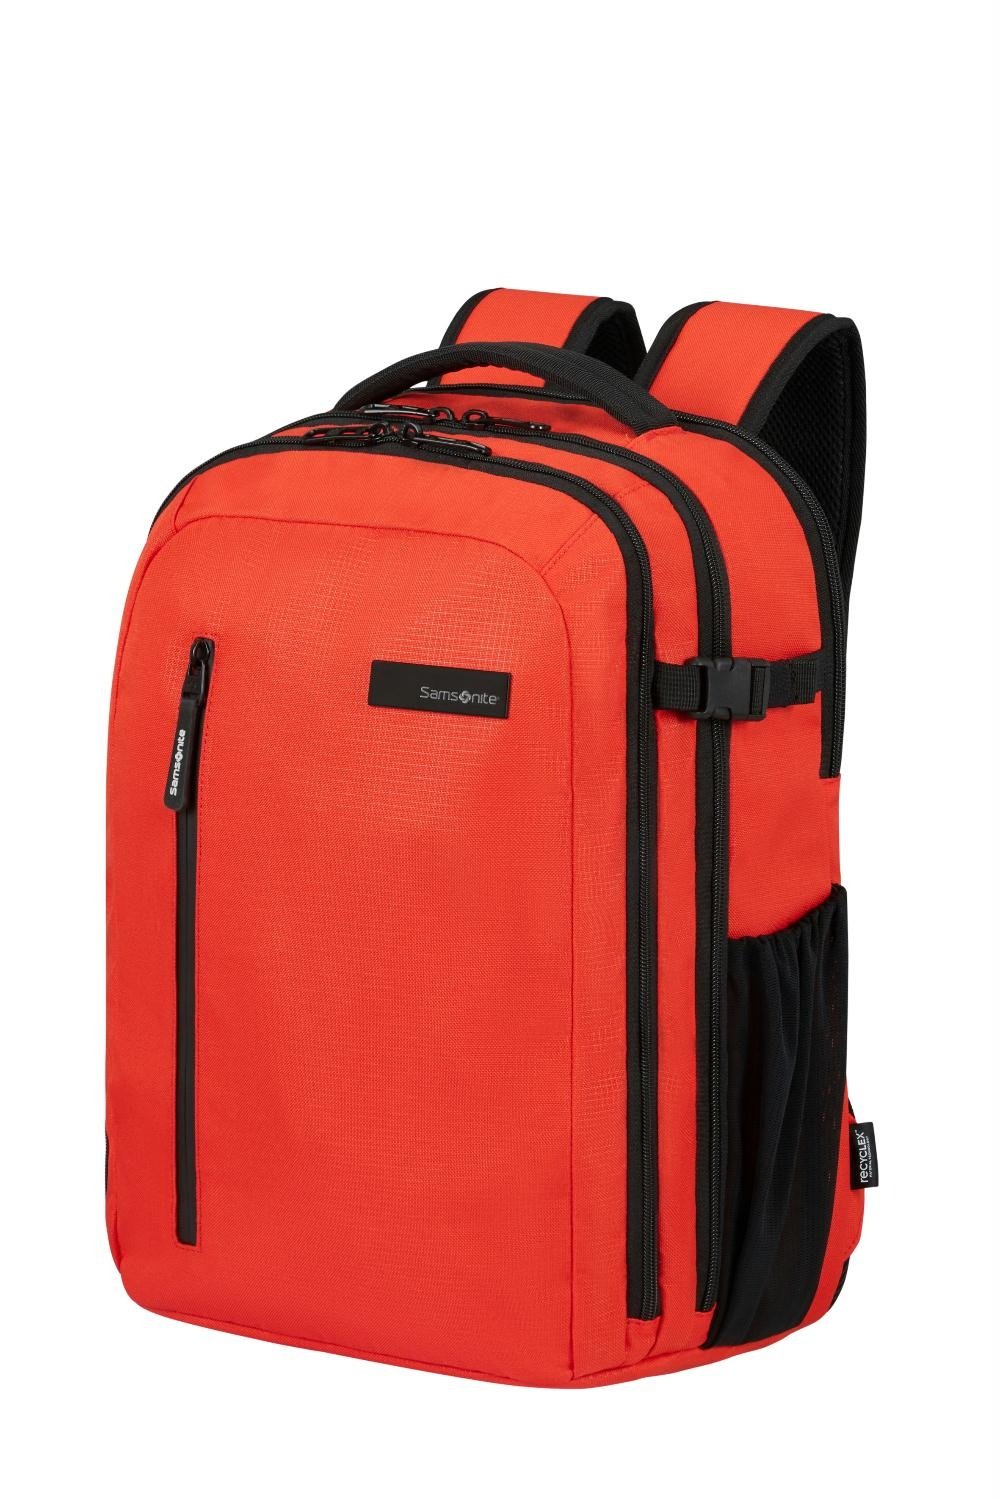 Samsonite Rugzak met Laptopvak - Roader Laptop Backpack 15.6 - Tangerine Orange